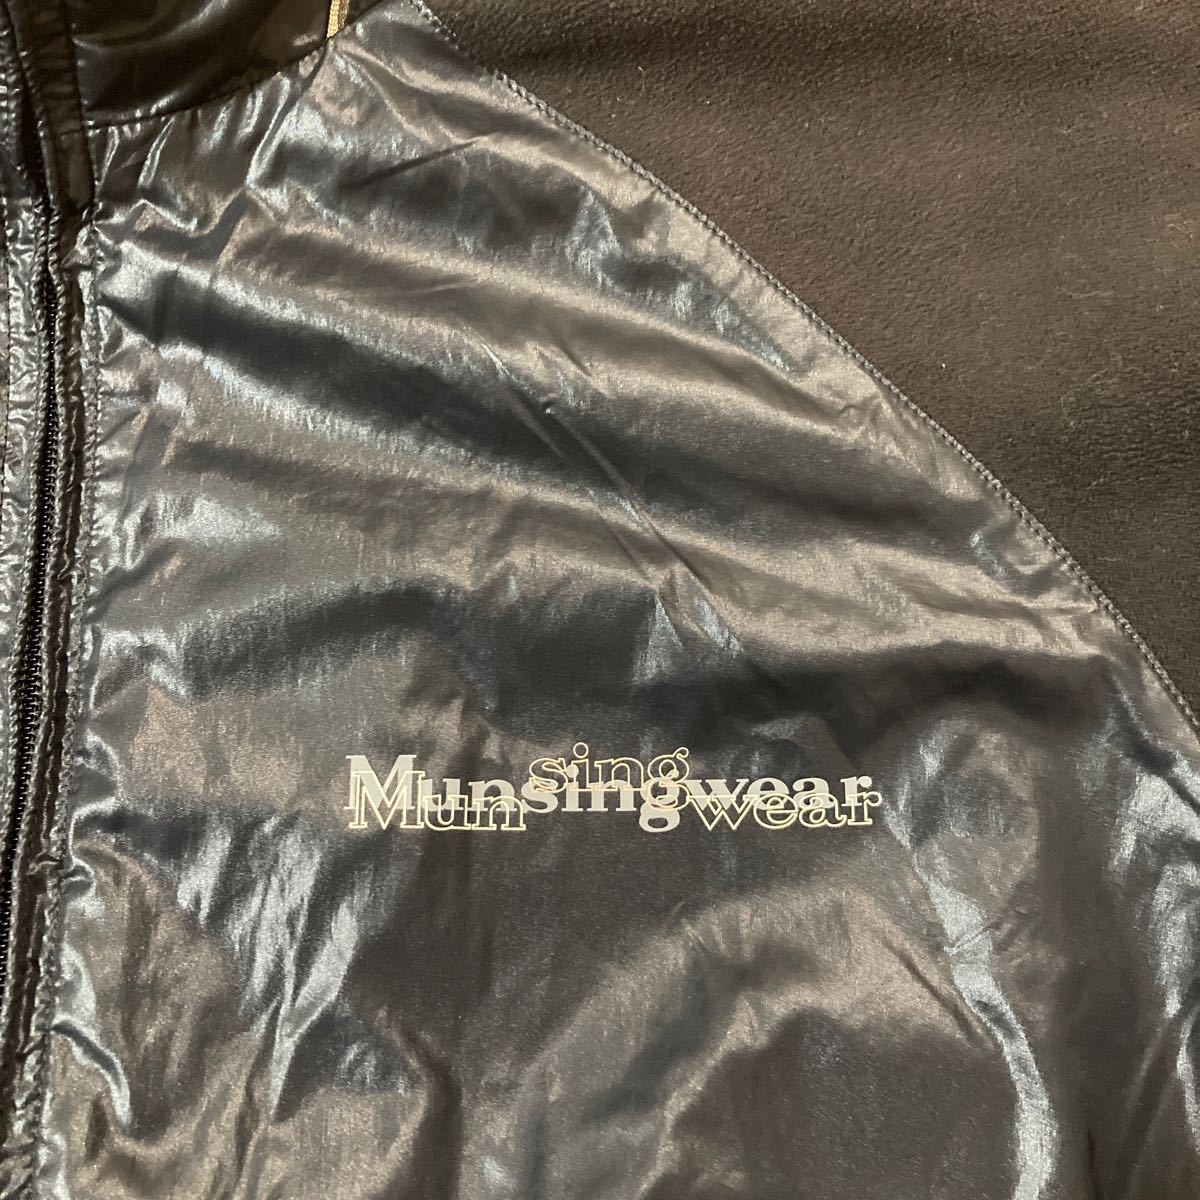 Munsingwear Munsingwear одежда Grand Slam Grand s Ram Golf одежда Wind брейкер Zip выше короткий рукав L размер чёрный темно-синий 